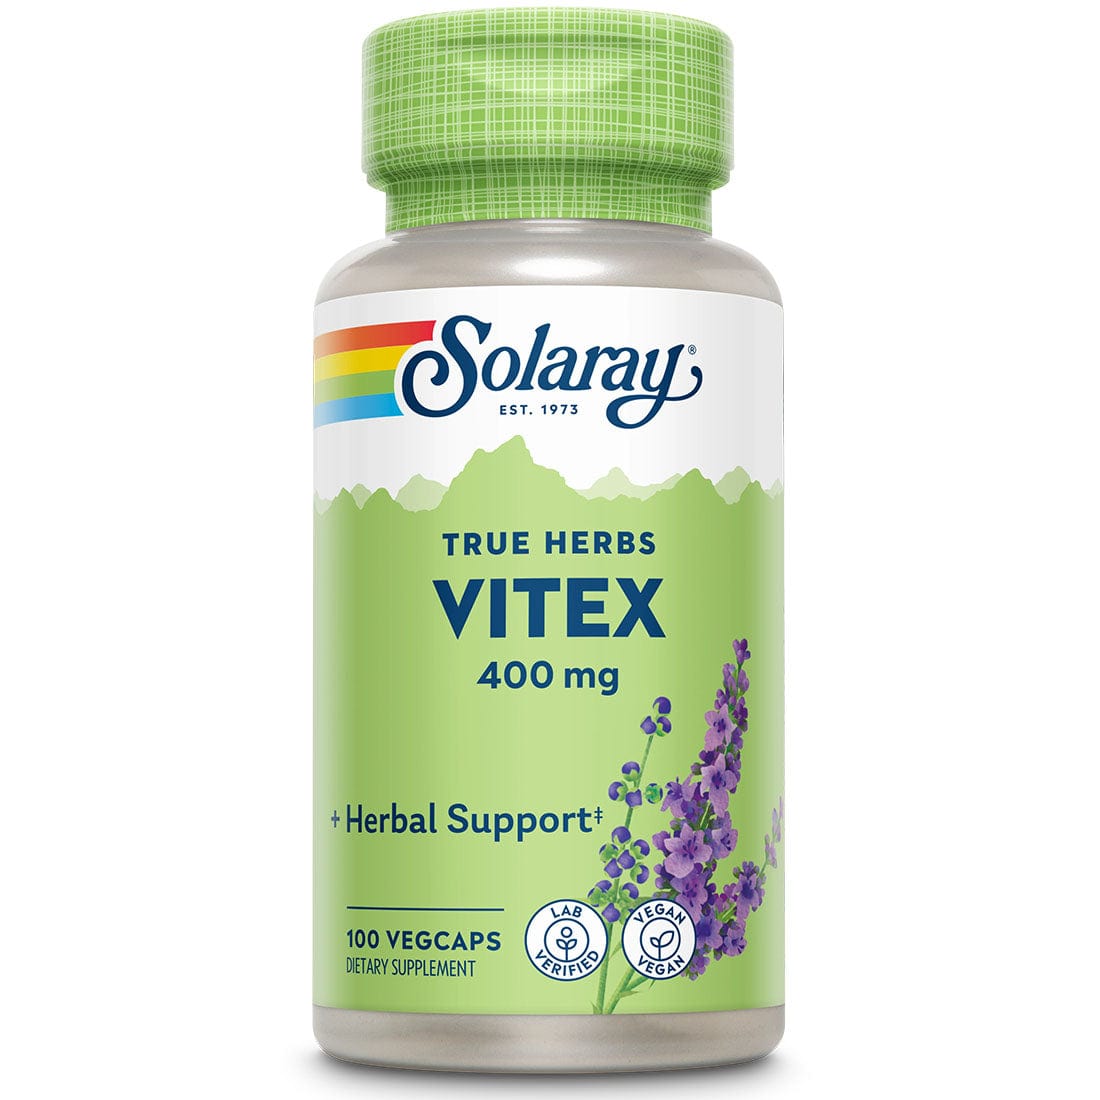 Solaray Vitex 400mg, 100 Vegetable Capsules